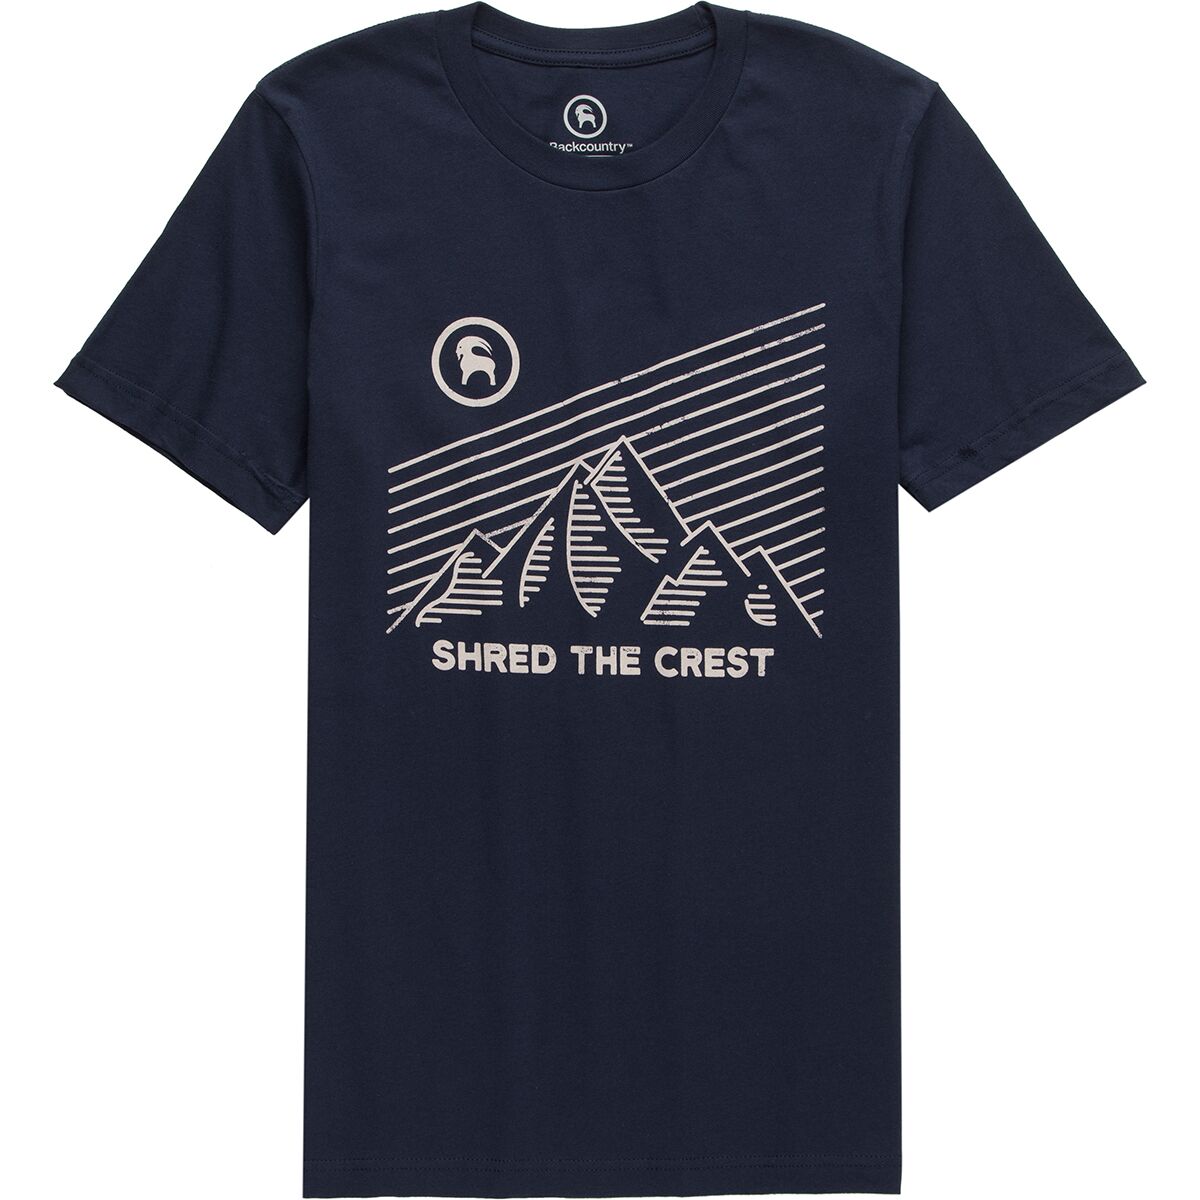 Backcountry Shred The Crest T-Shirt - Men's